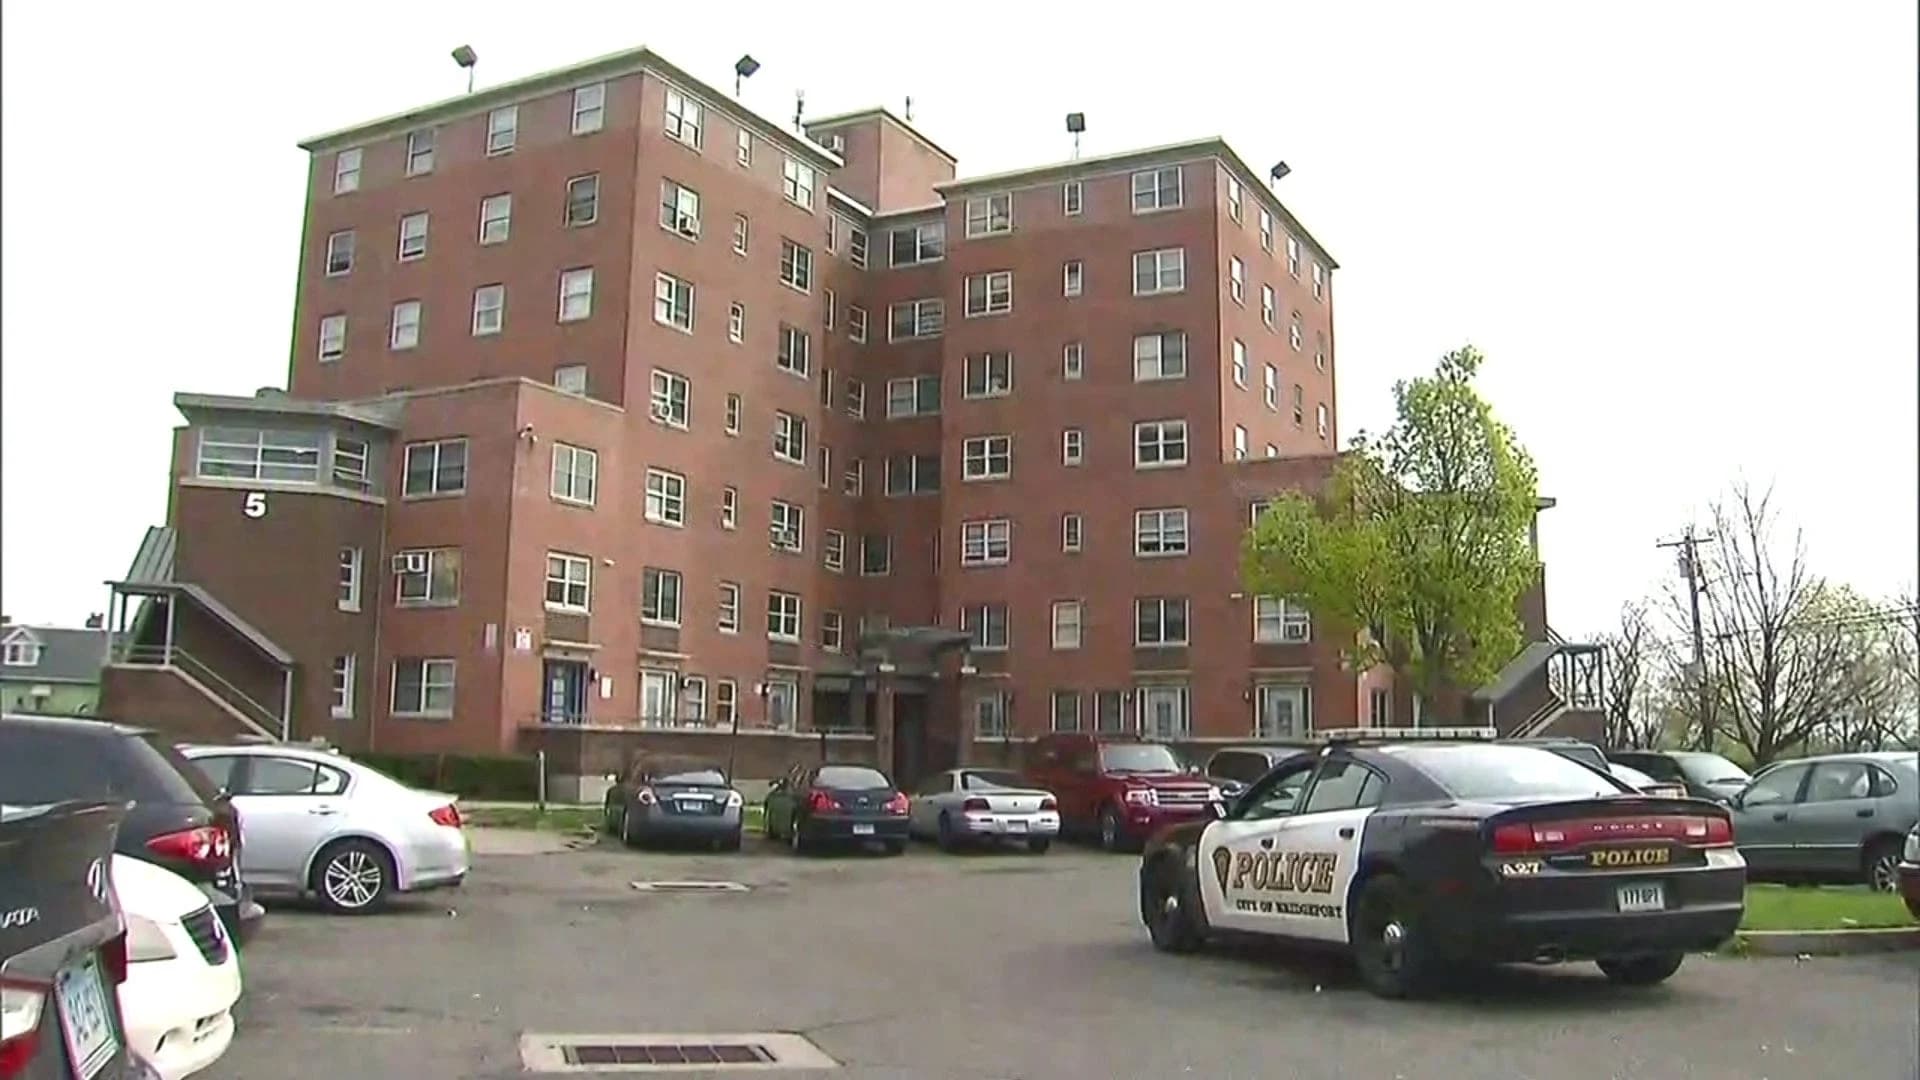 Man shot multiple times in Bridgeport apartment complex